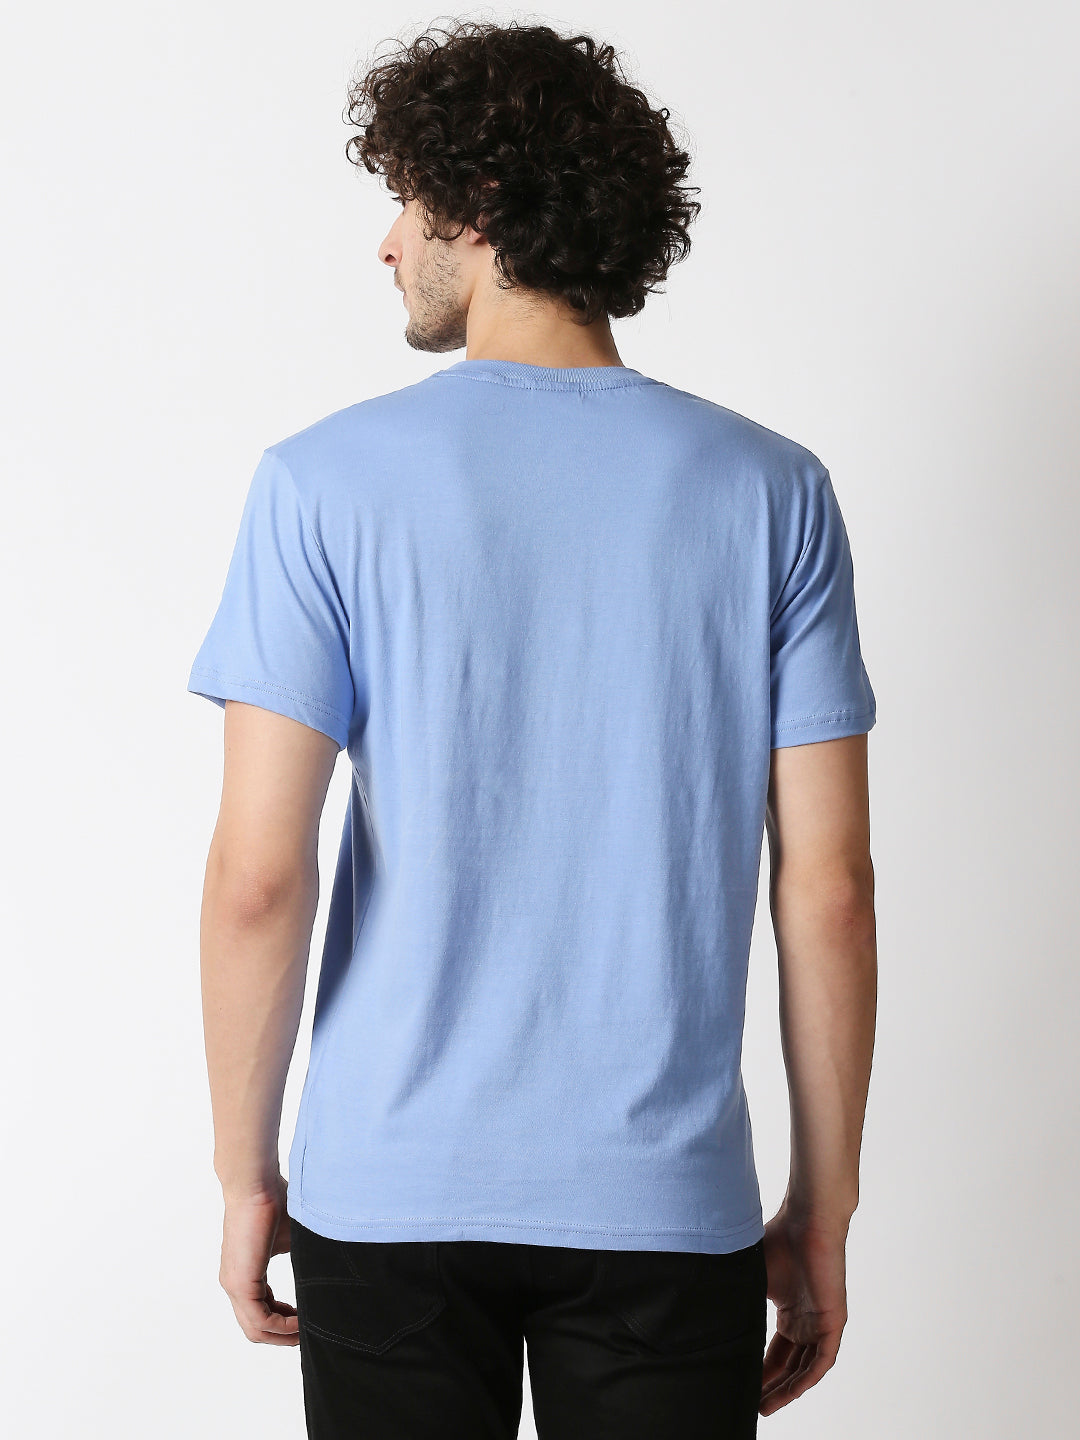 Buy Men's Powder Blue Regular fit chest print T-shirt